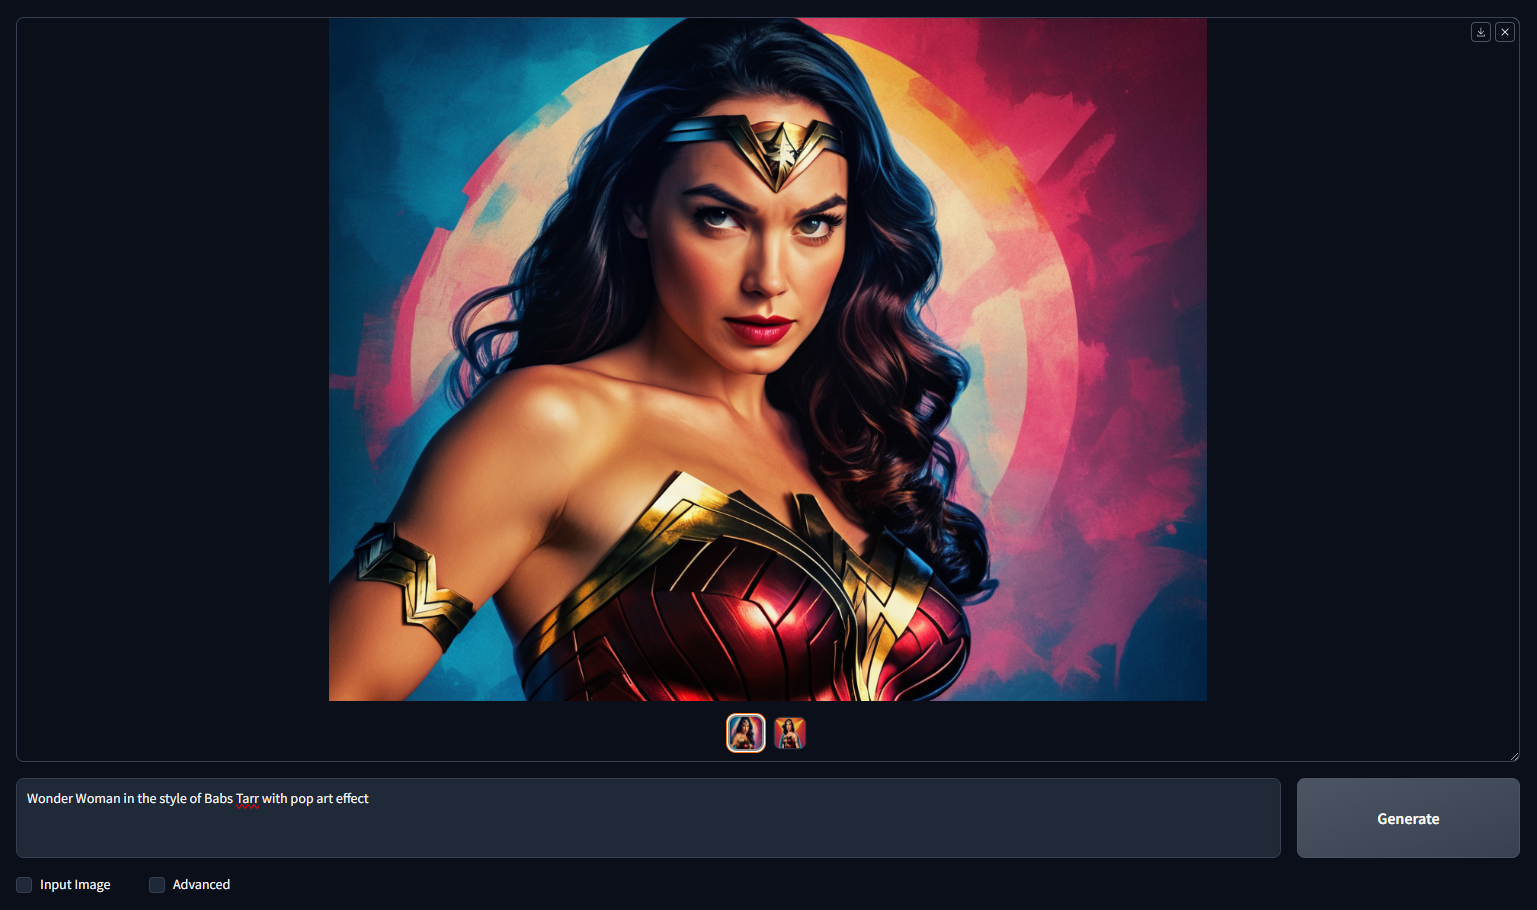 Wonder Woman in the style of Babs Tarr with pop art effect. Согласитесь, темная тема гораздо приятнее